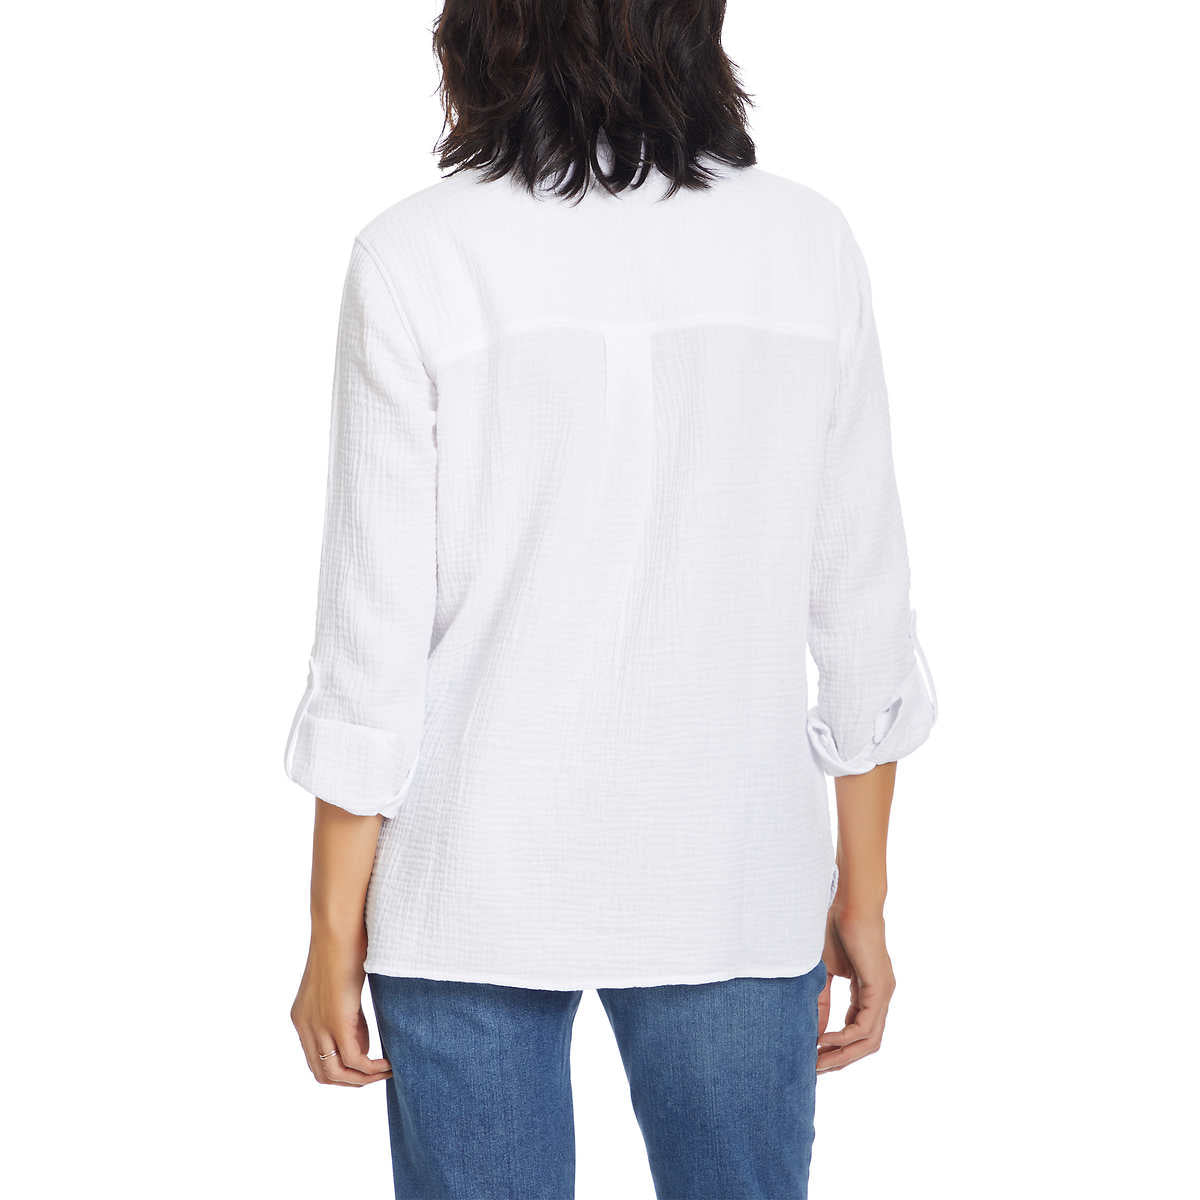 Anne Klein Women's Lightweight Cotton Gauze Top Button Front Shirt